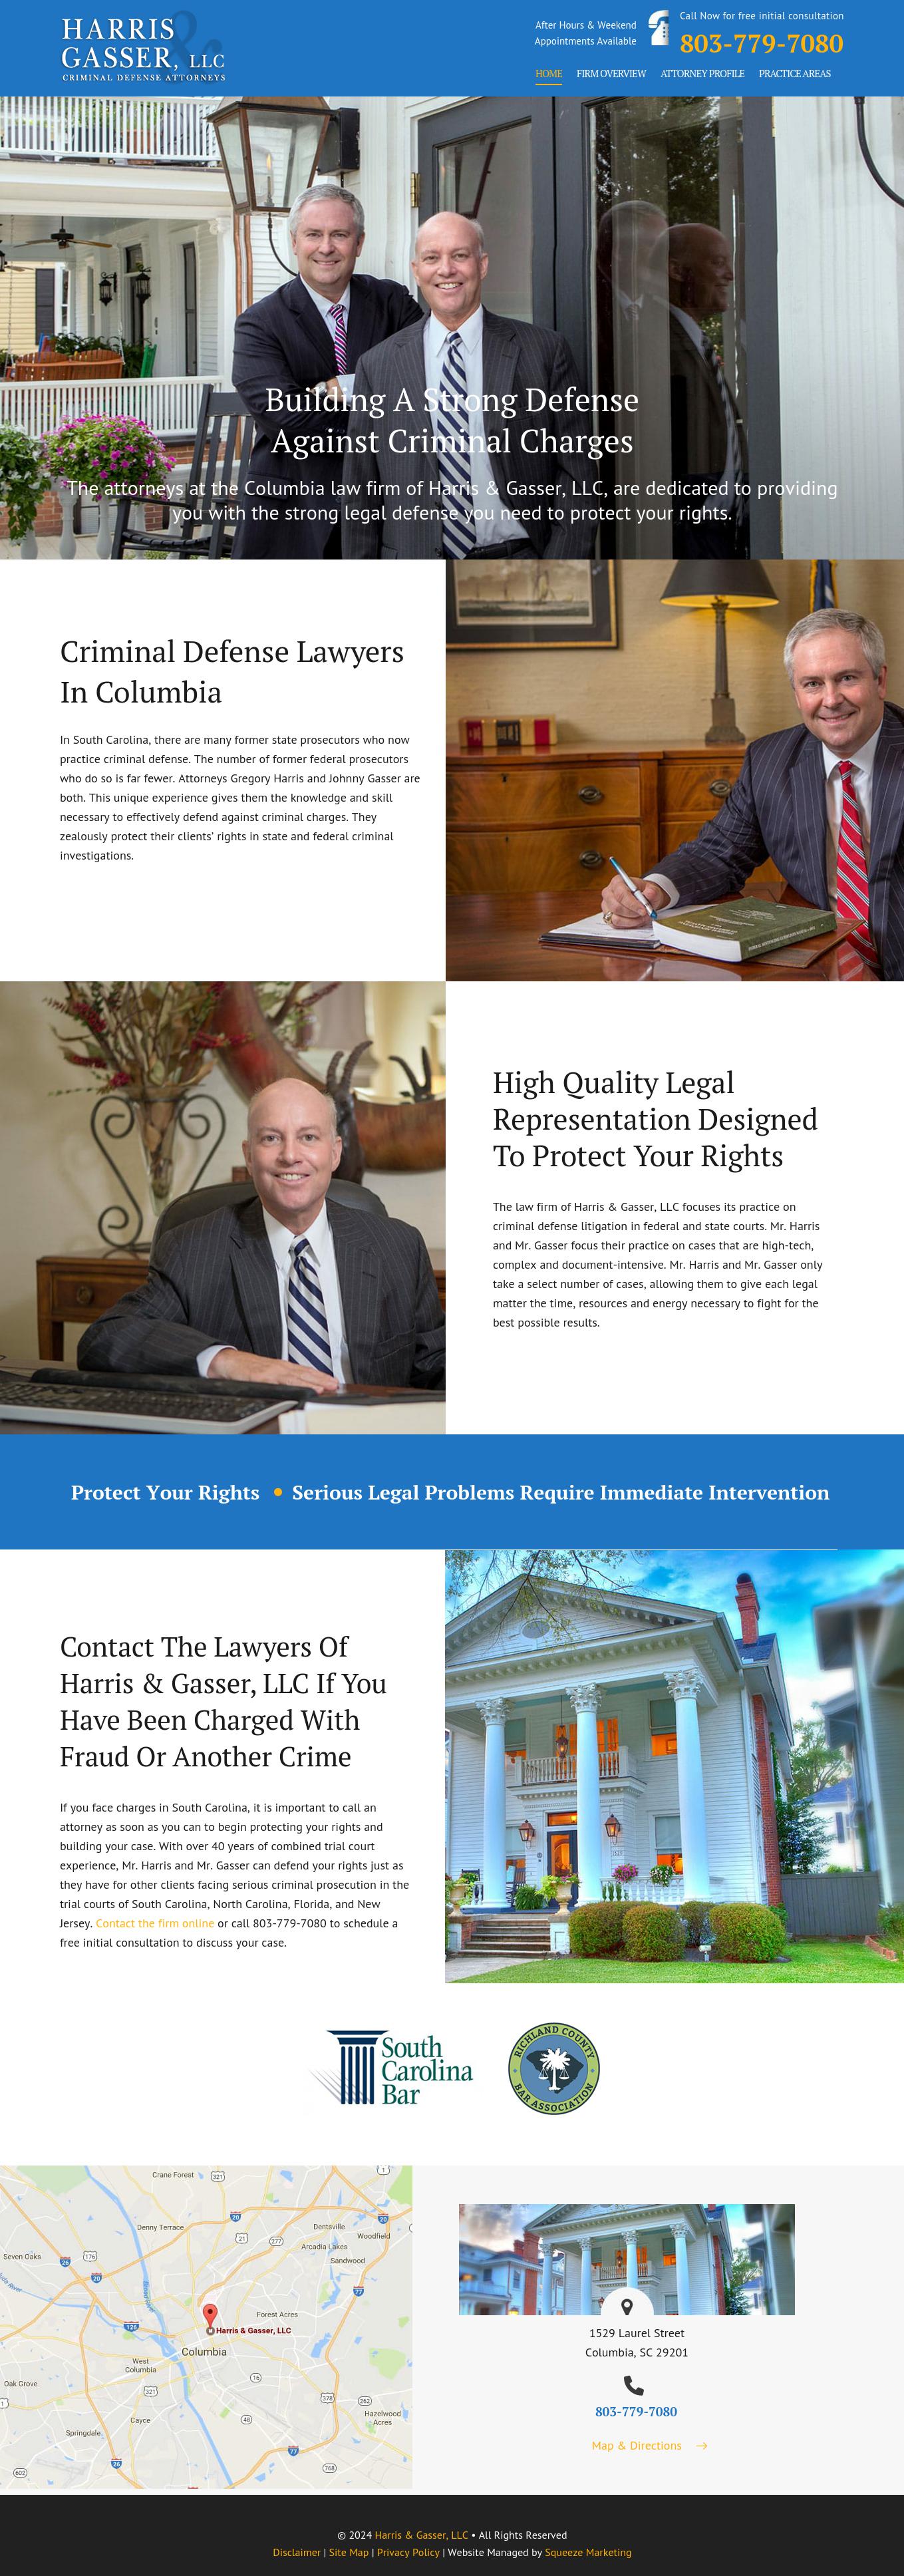 Harris & Gasser, LLC - Columbia SC Lawyers